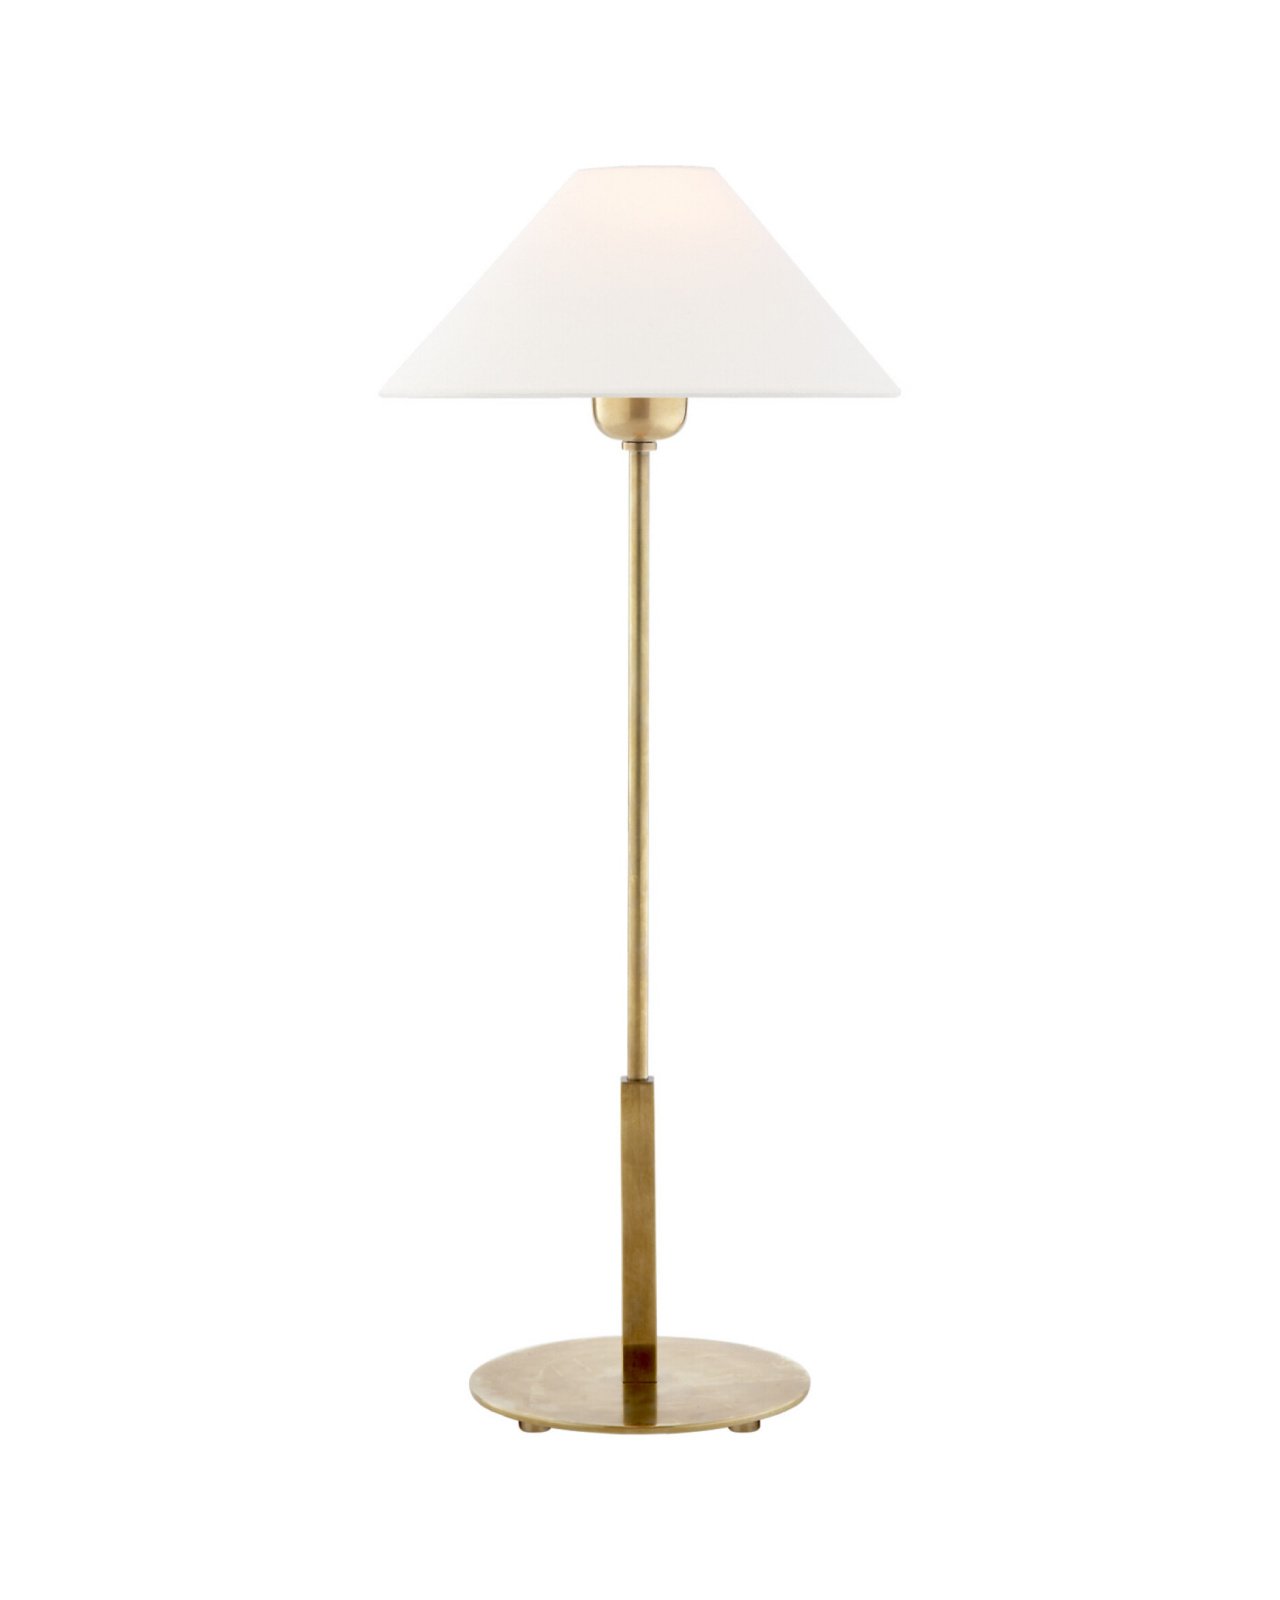 Hackney Table Lamp Antique Brass/Linen